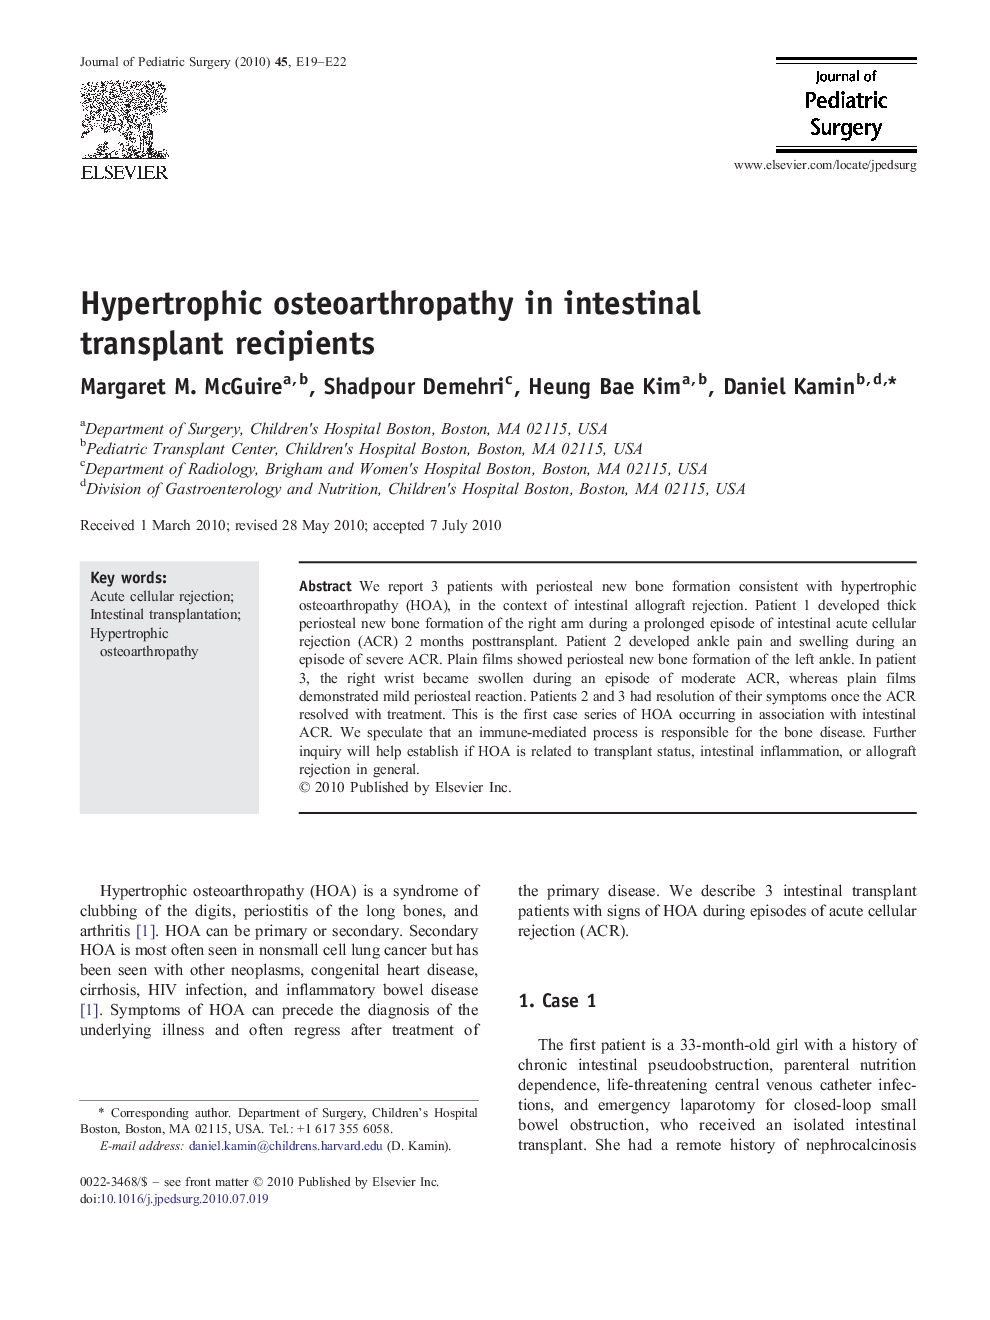 Hypertrophic osteoarthropathy in intestinal transplant recipients